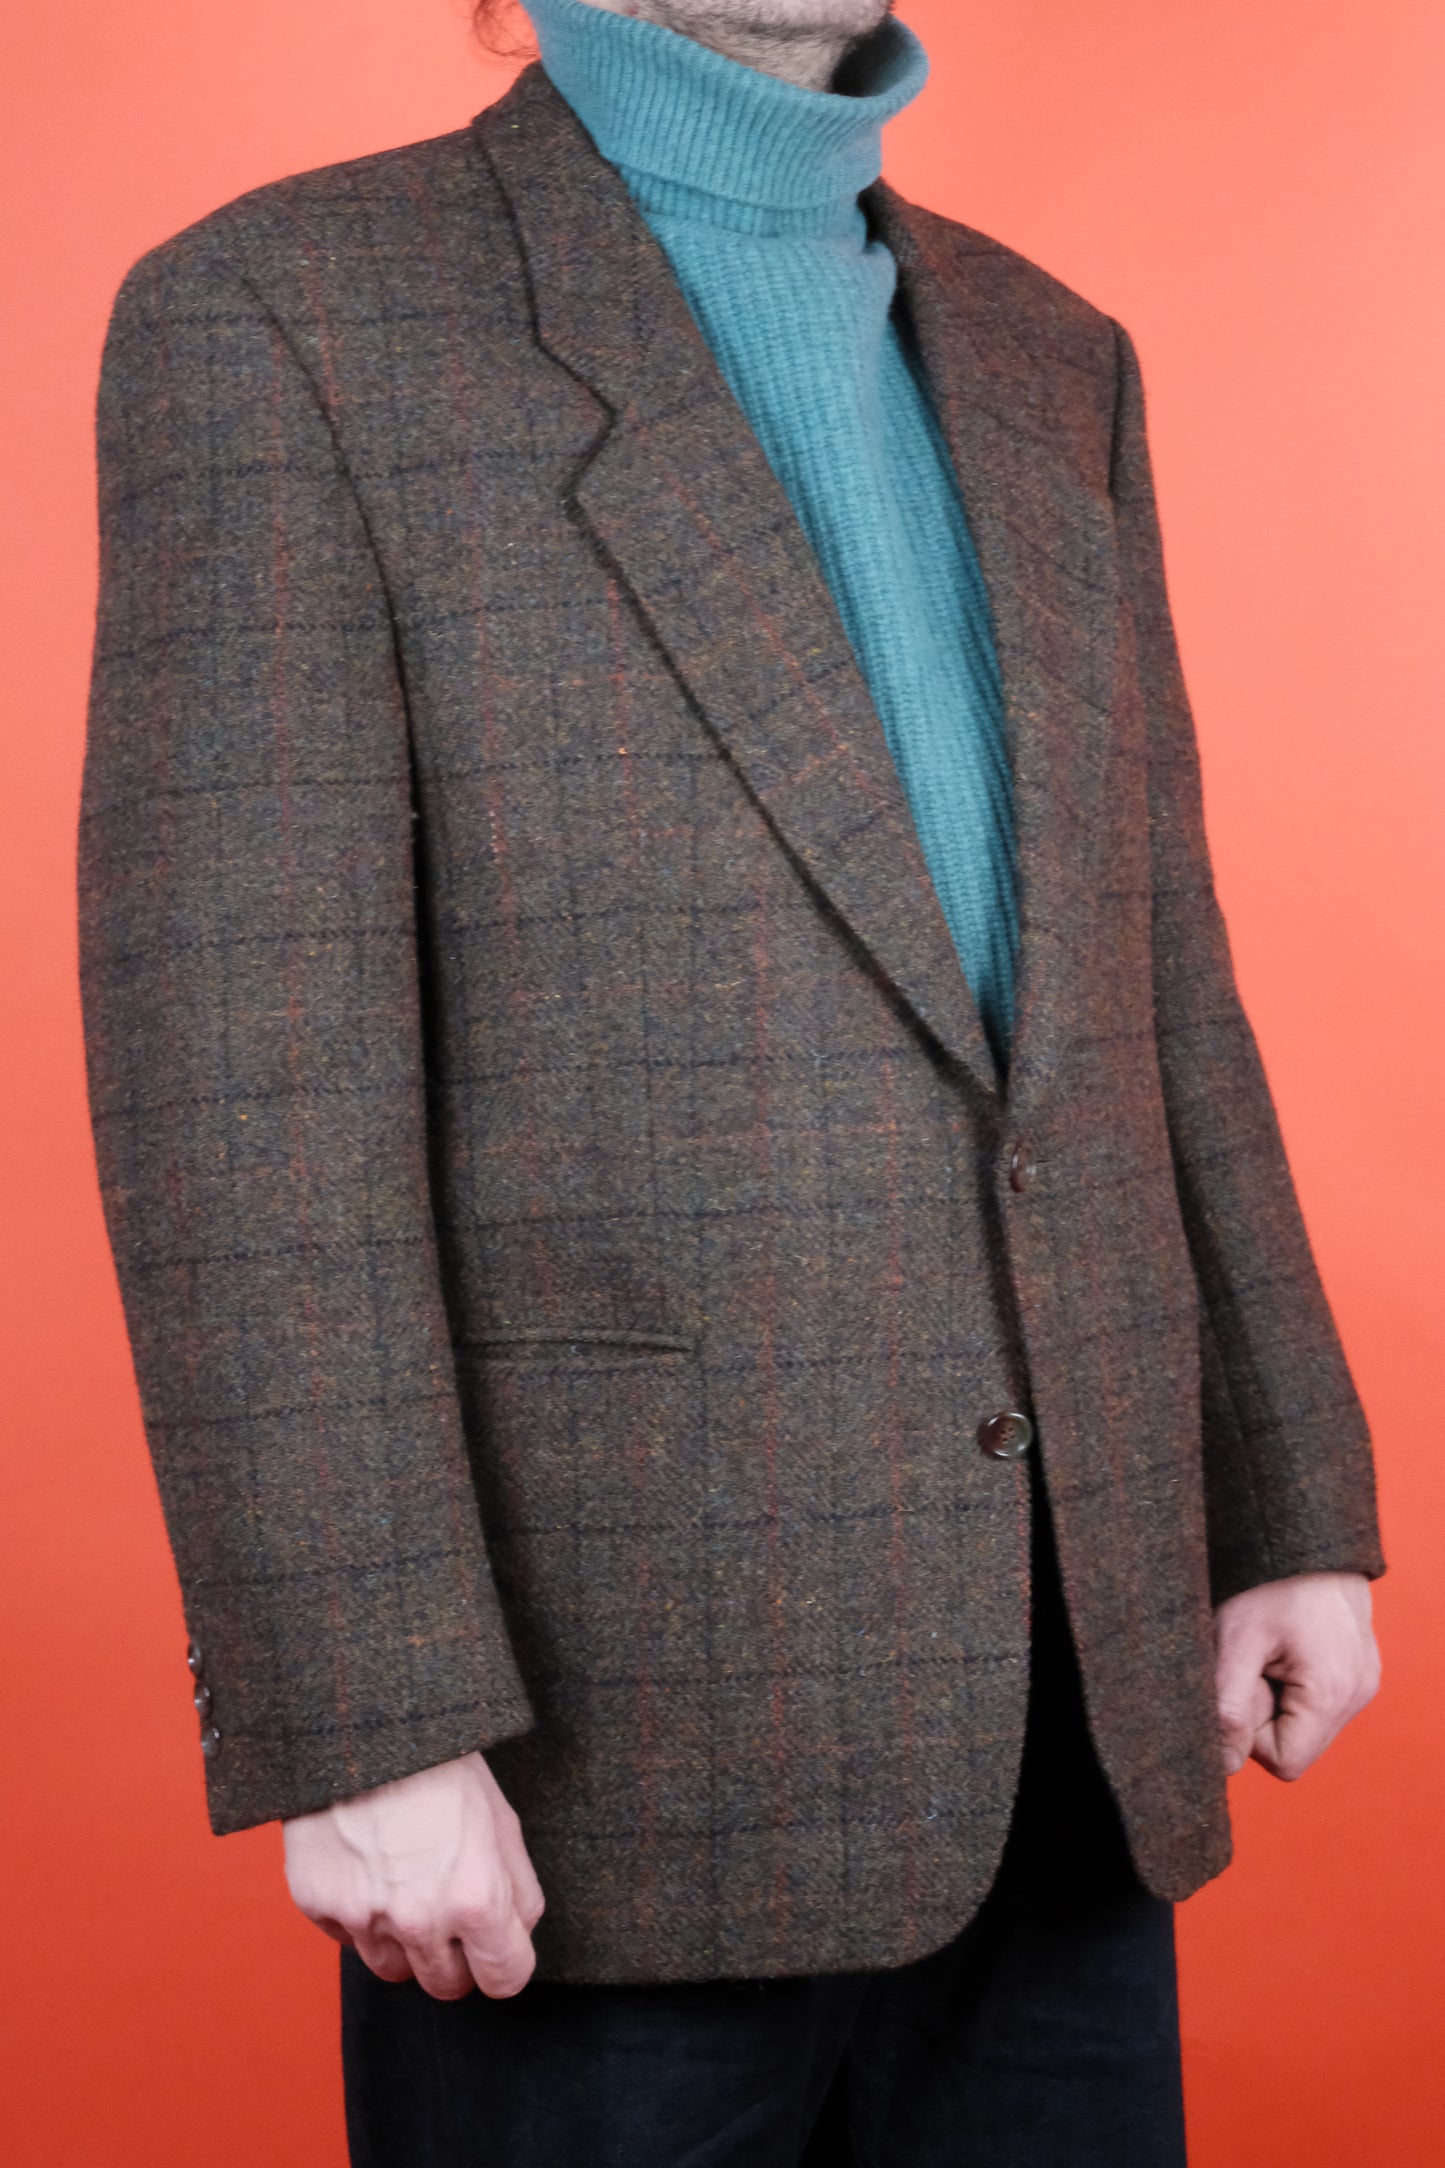 Konen Harris Tweed Suit Jacket 'L' - vintage clothing clochard92.com